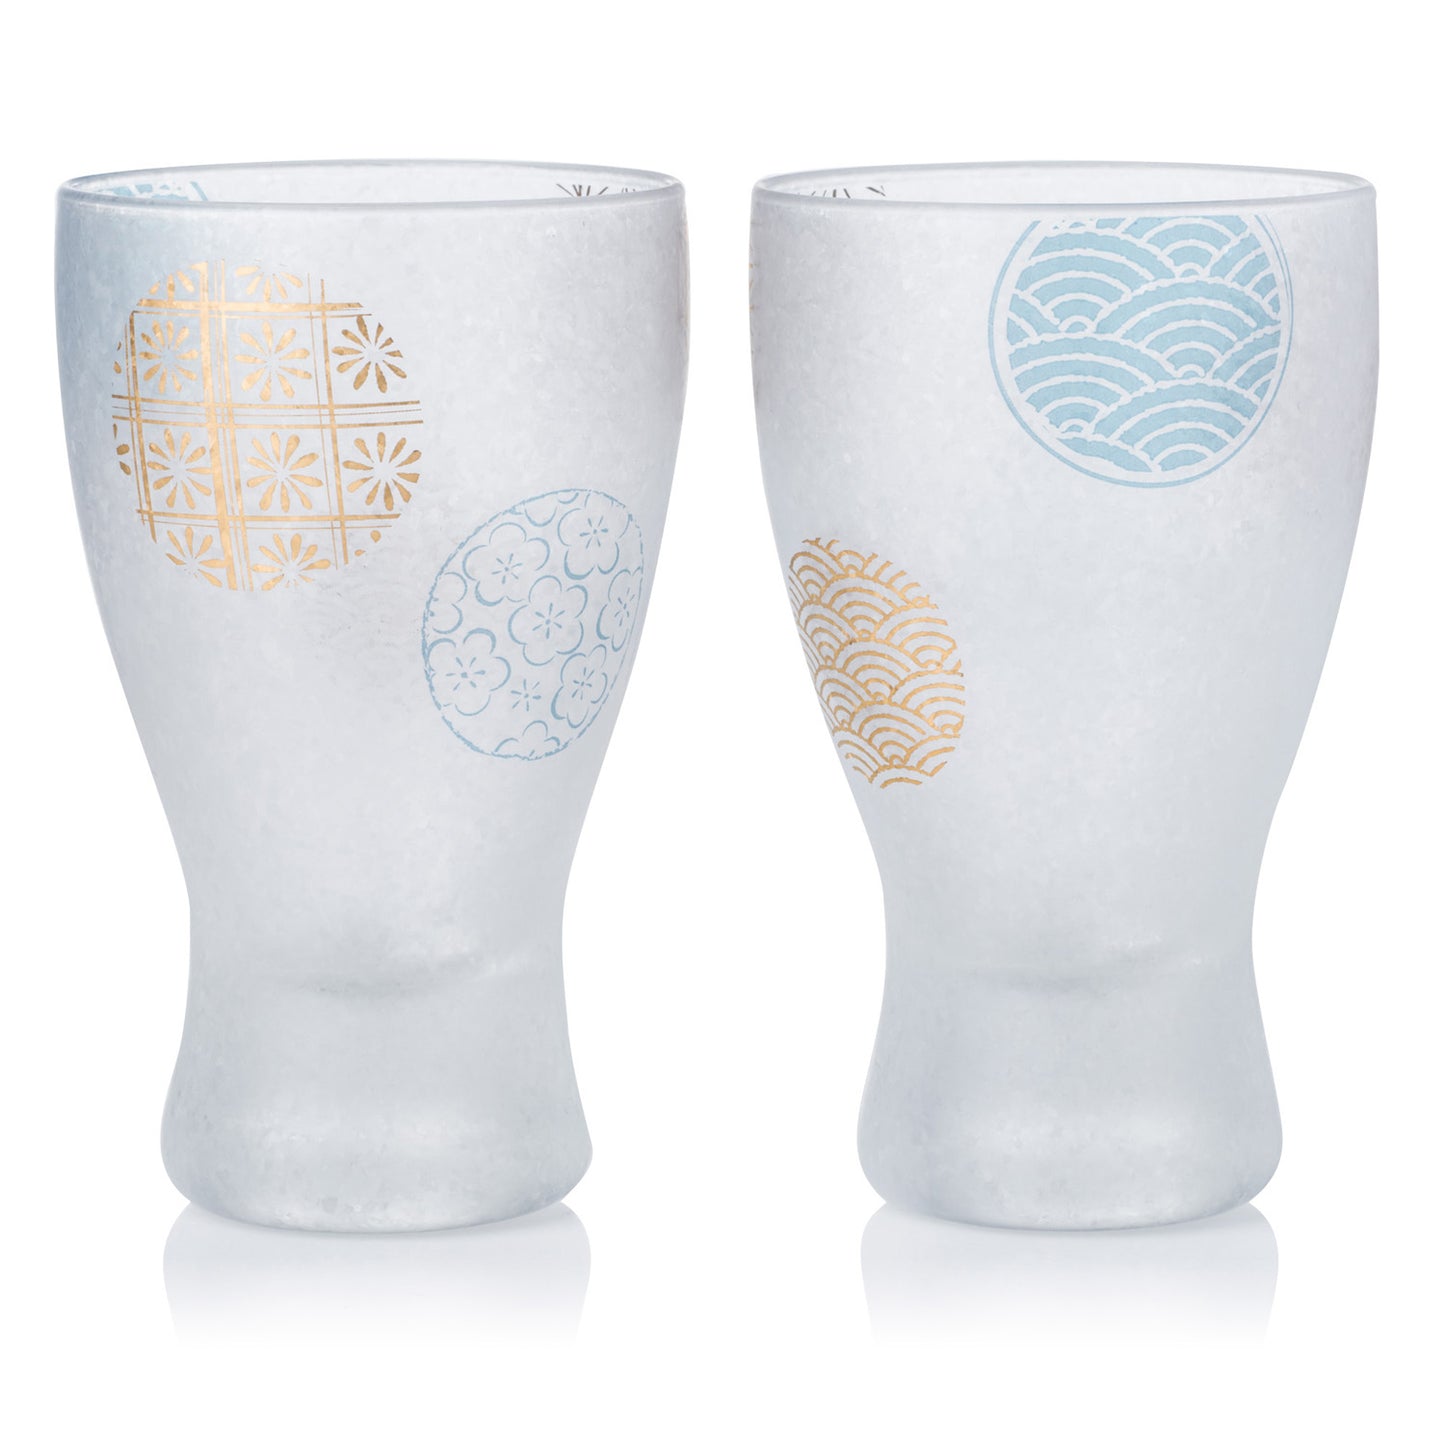 Marumon Premium Japanese Glass Sake Cups